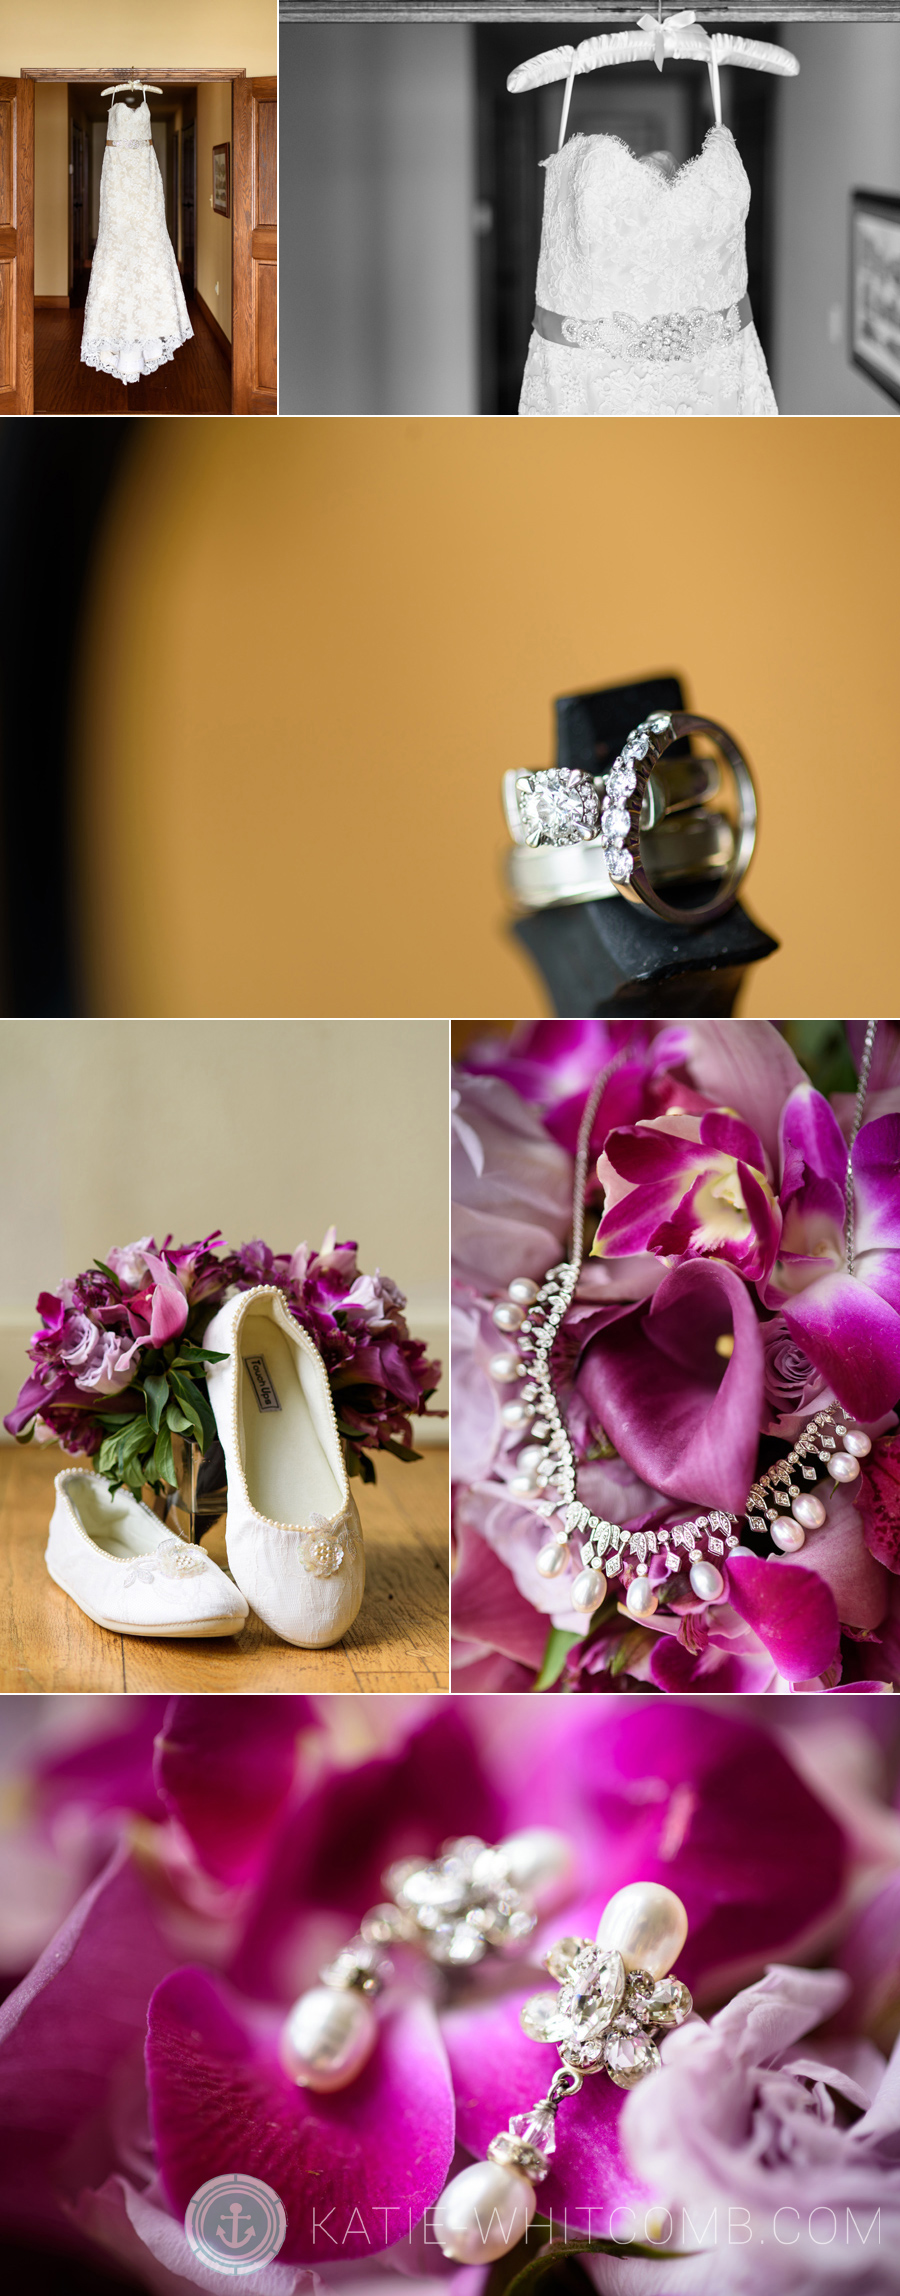 Culver Academy bride's plum wedding details